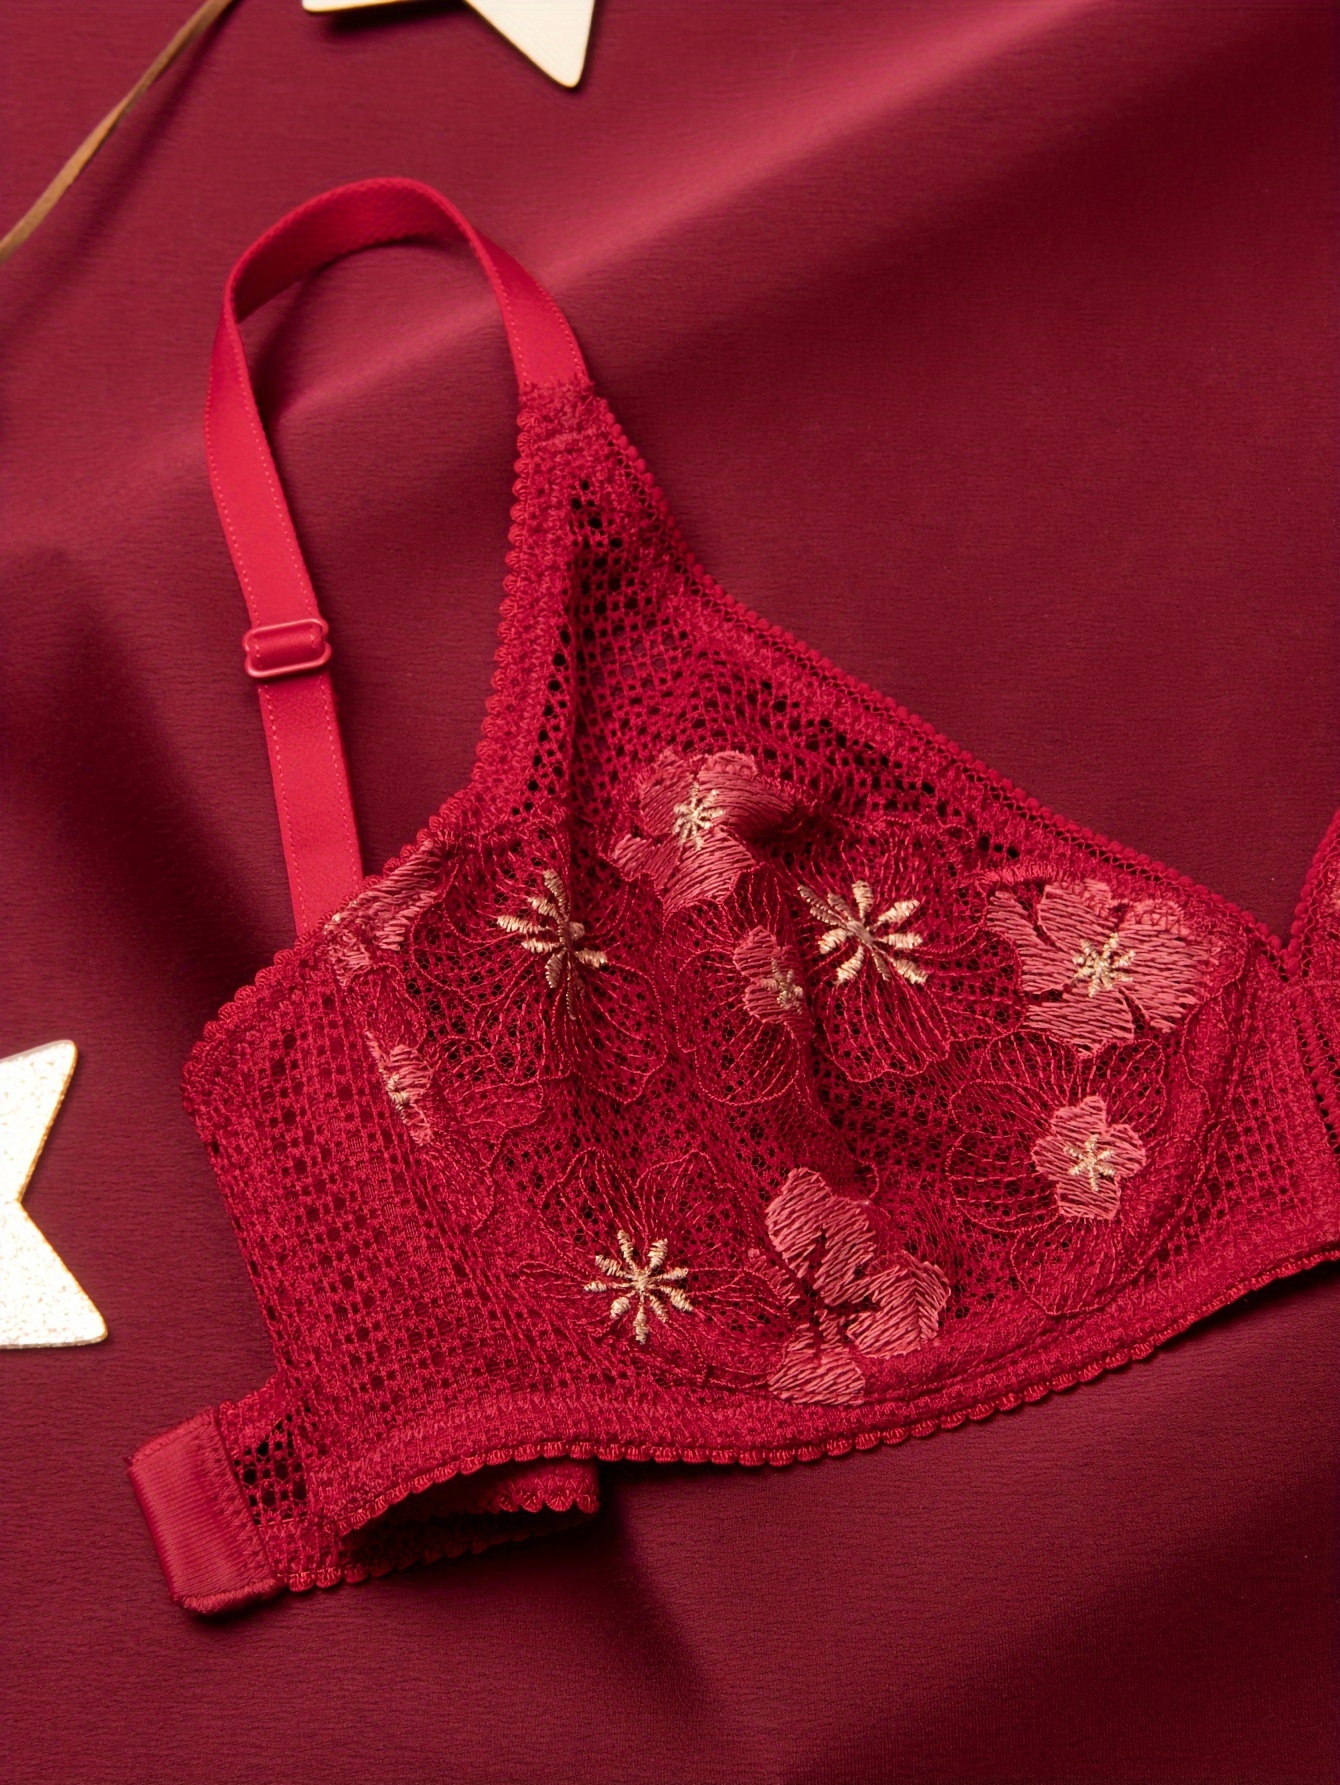 Victoria's Secret red & black unlined demi floral lace bra size 36DD